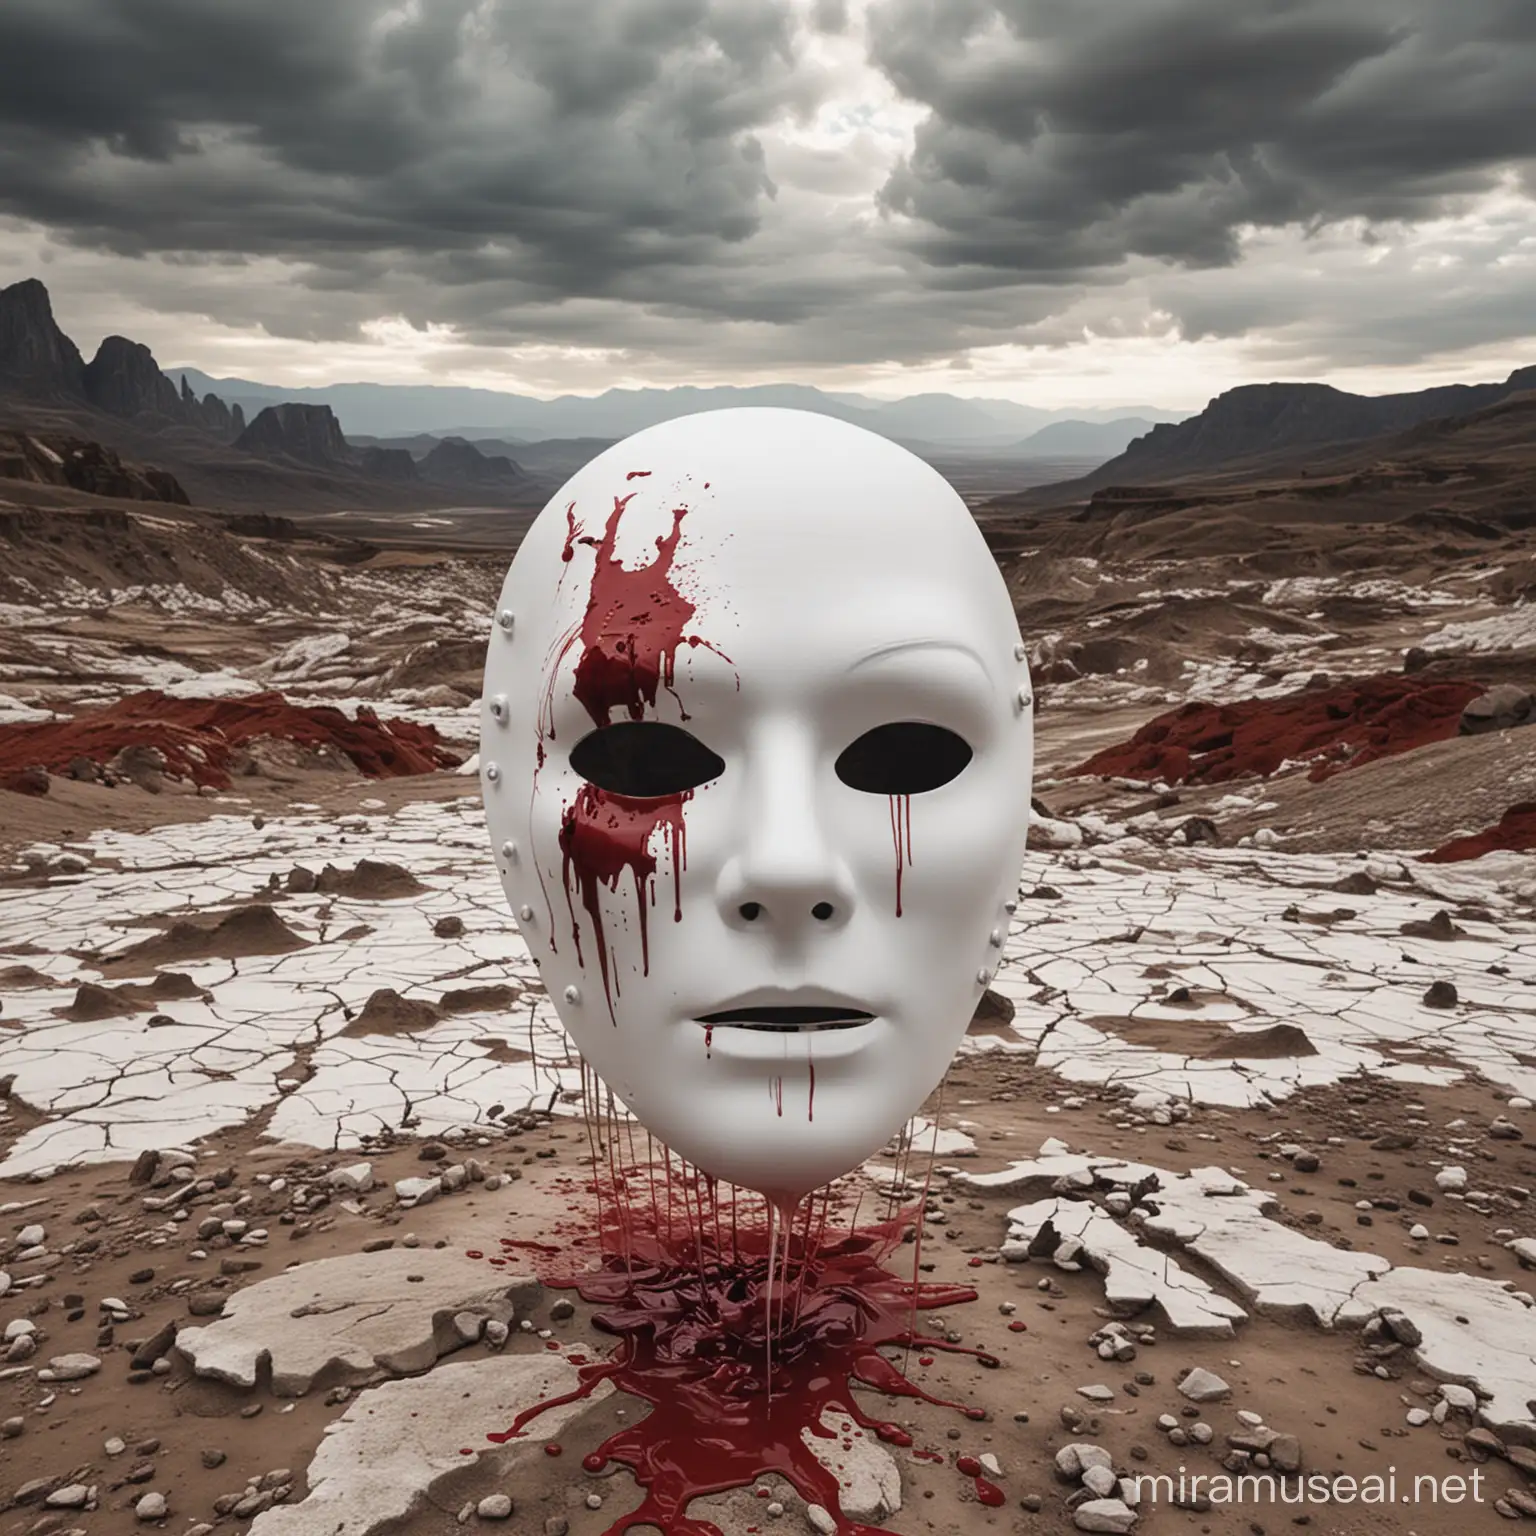 Surreal White Mask with Bleeding Eyes Against Dreamlike Landscape